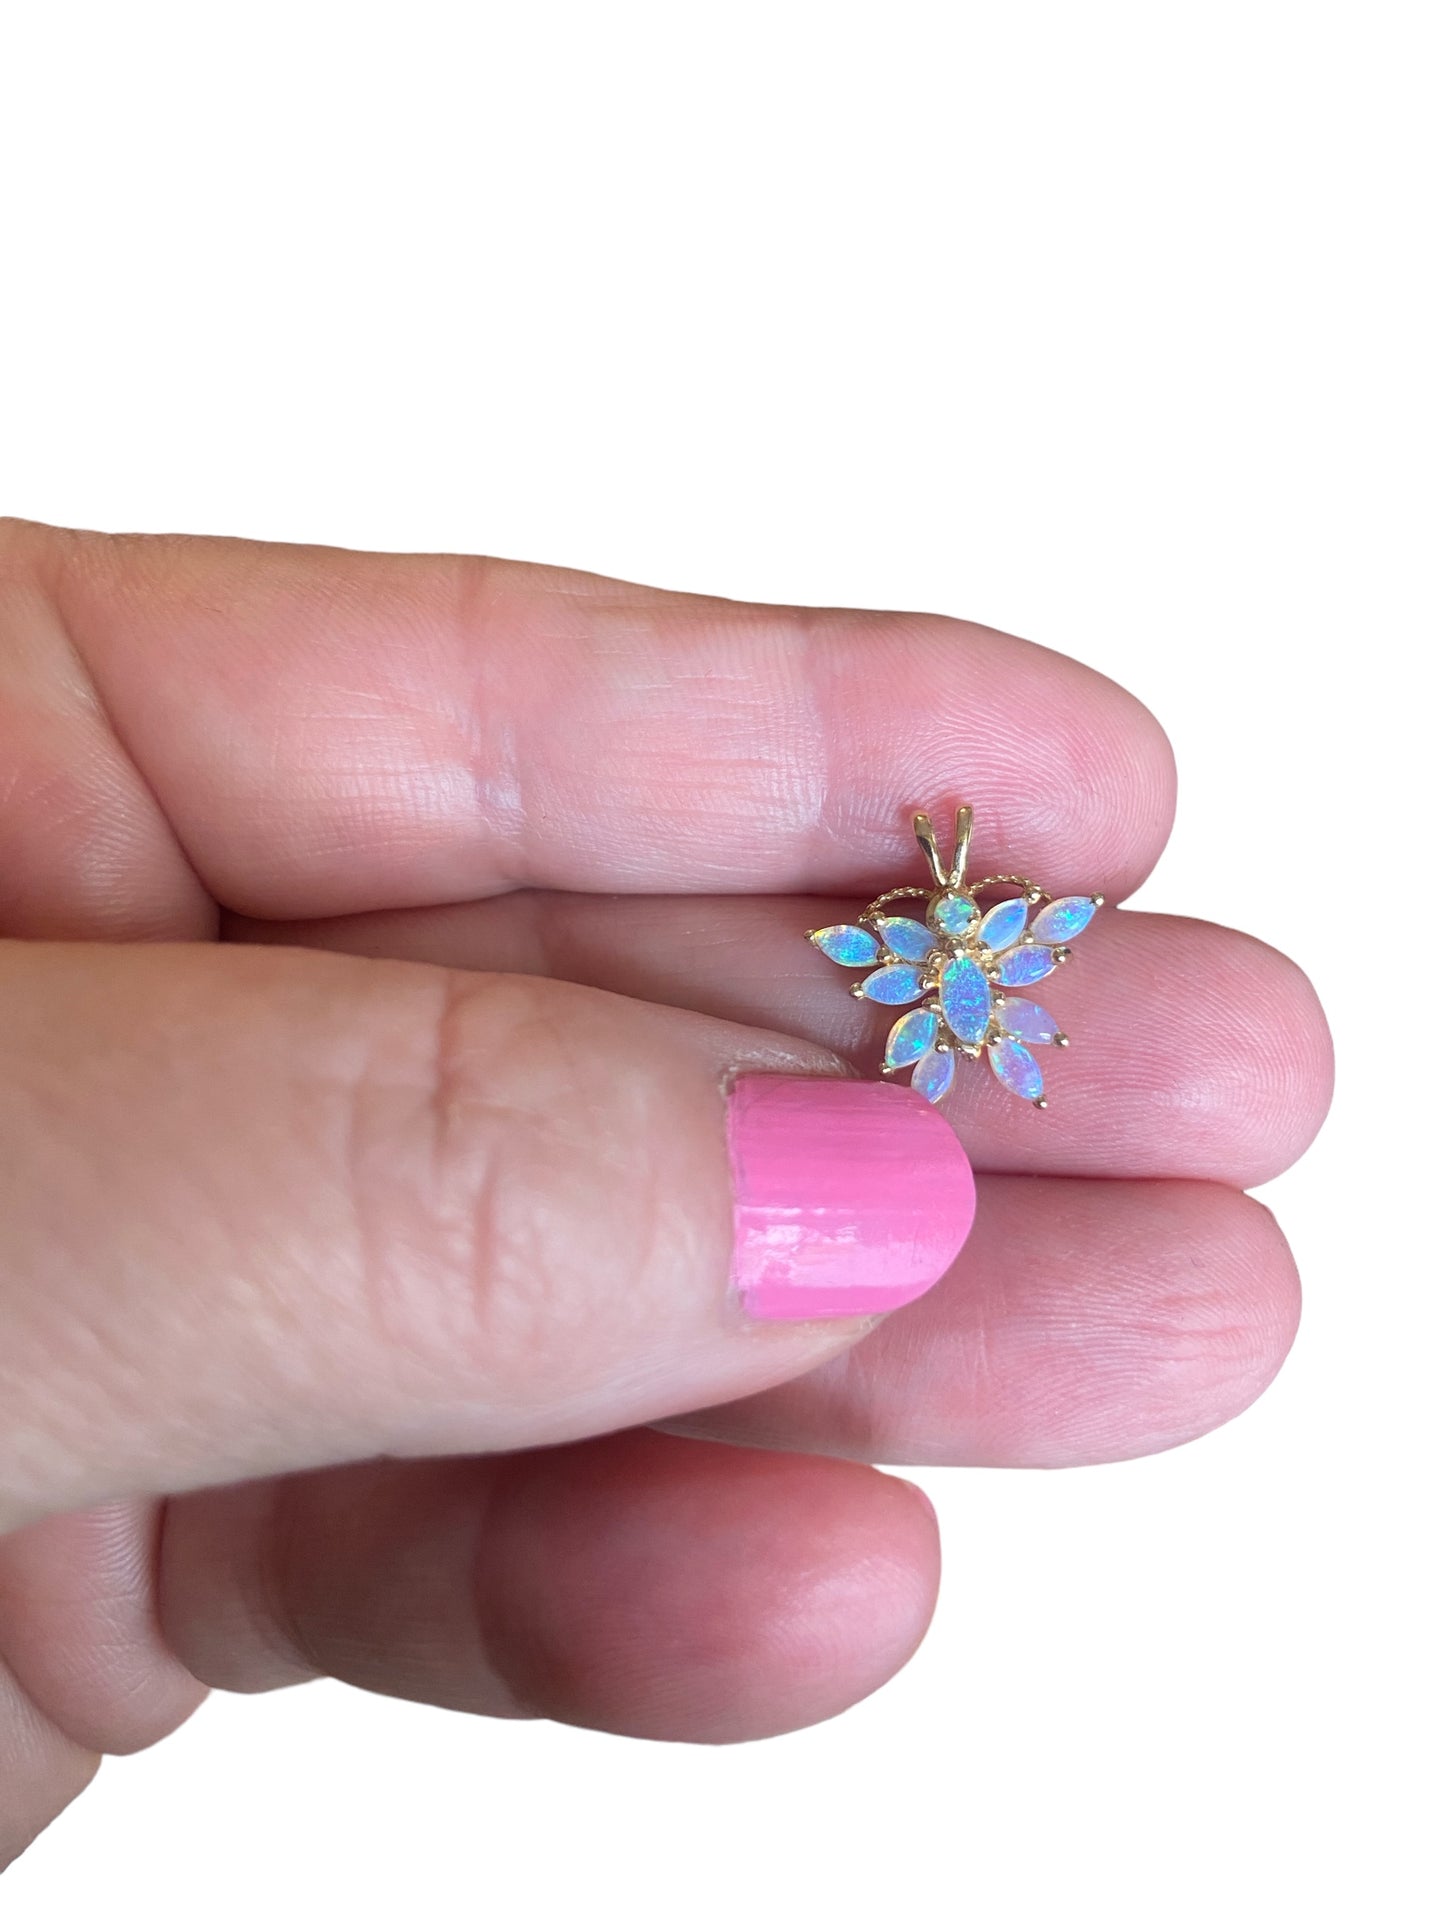 14ct opal butterfly pendant / charm